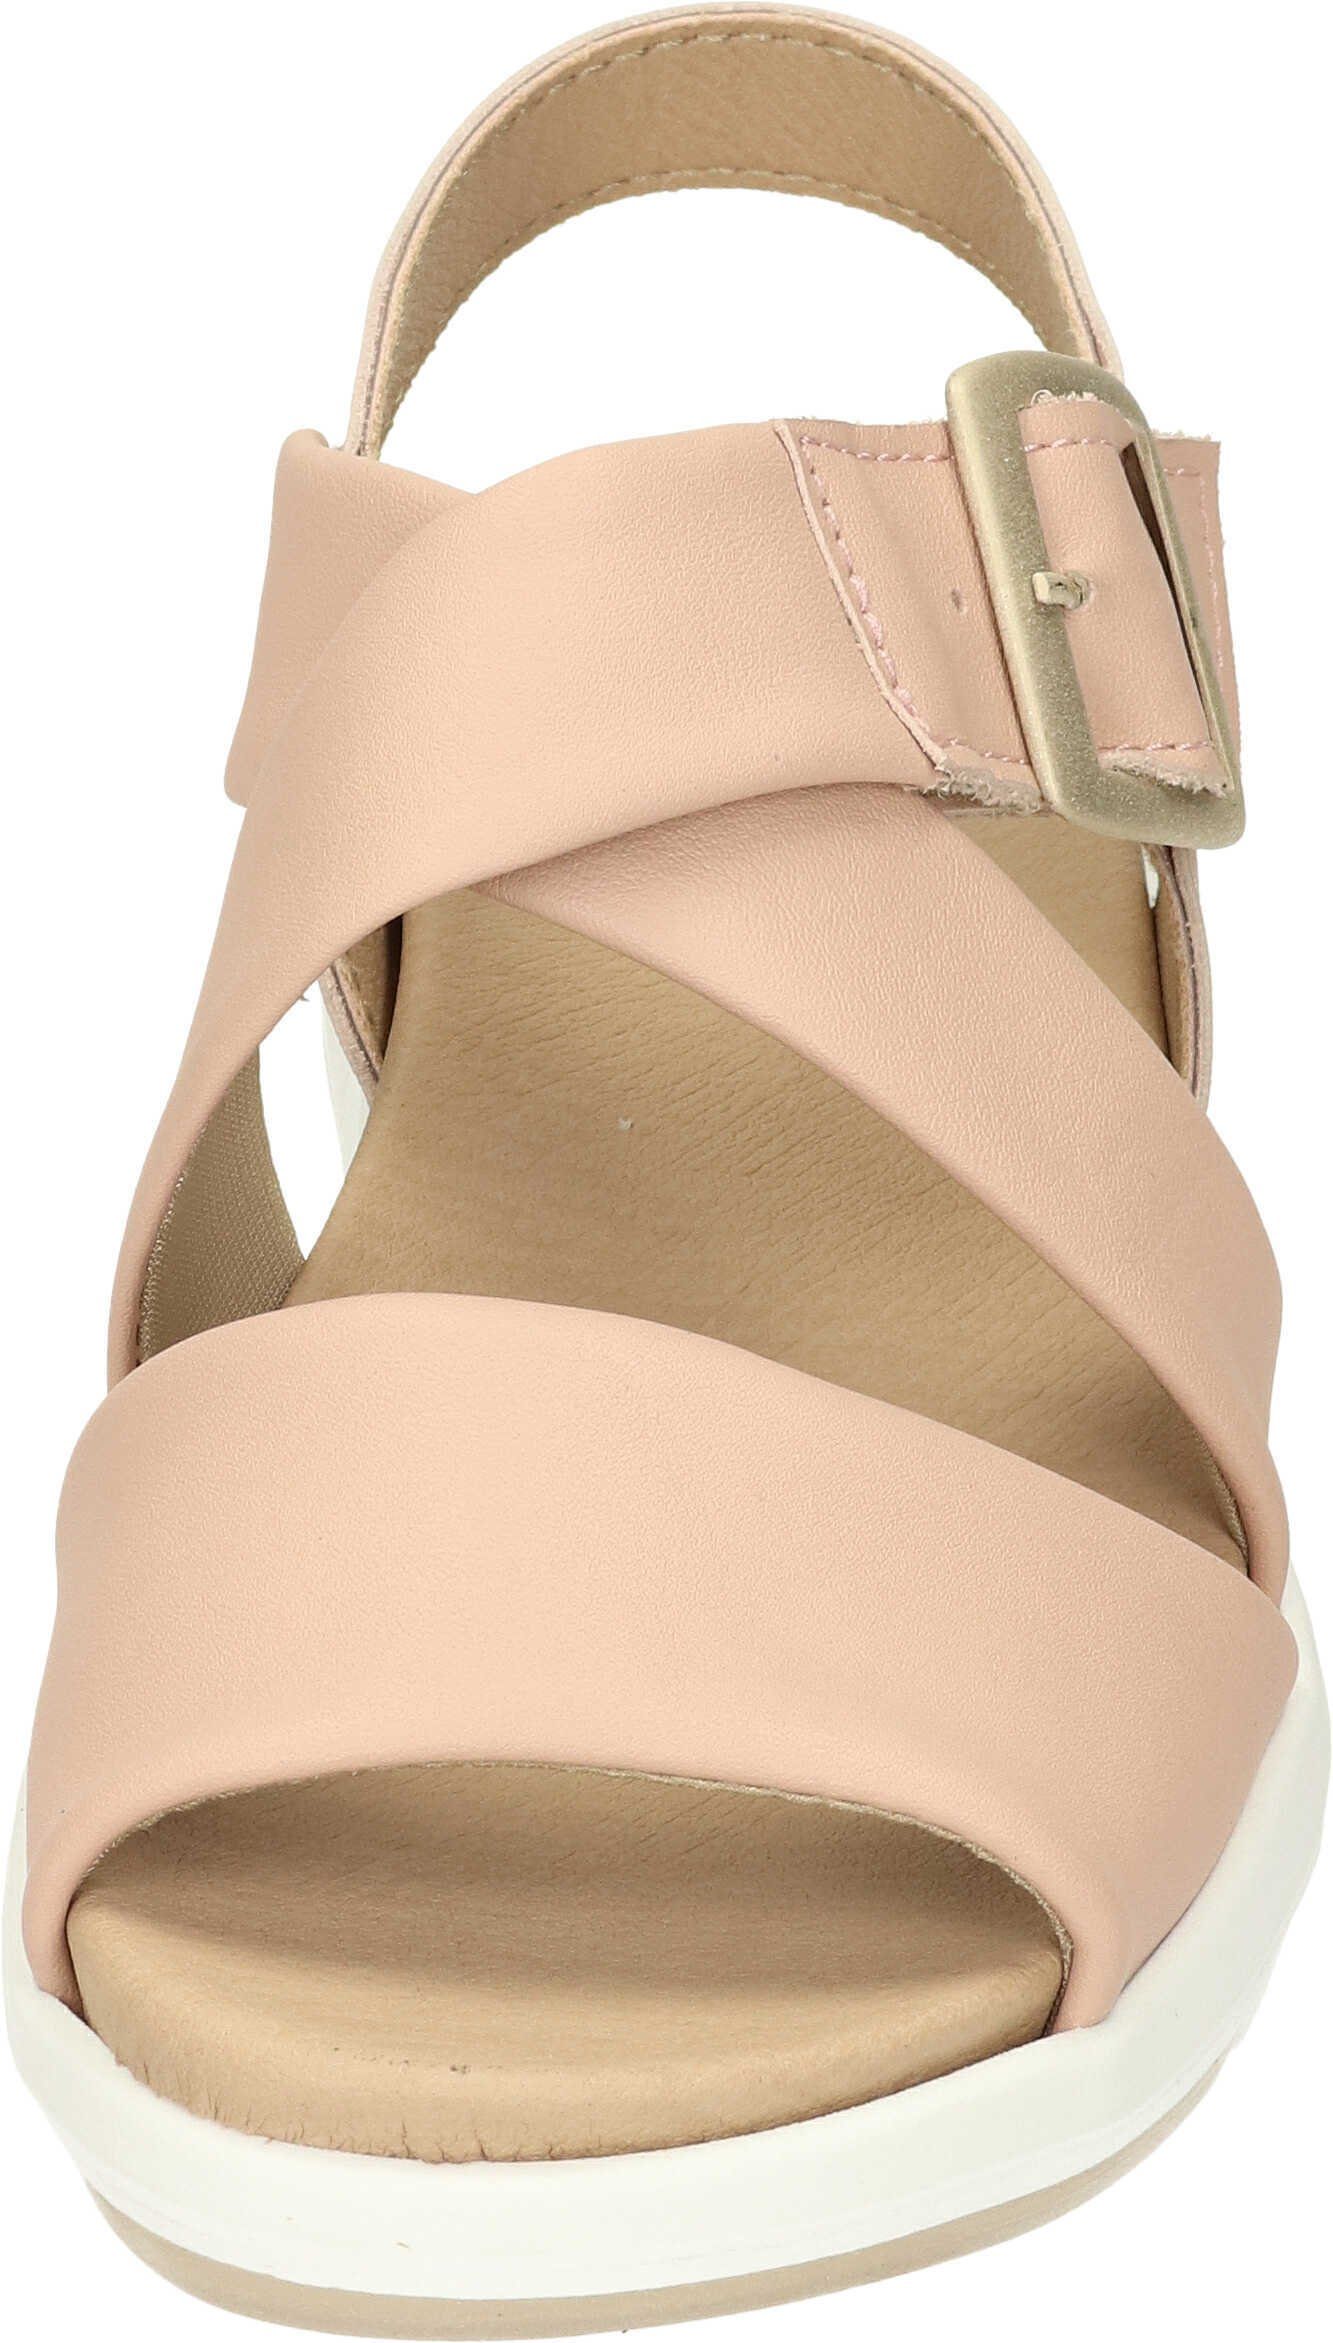 Gummizug Sandalen rosa Sandale mit Comfortabel